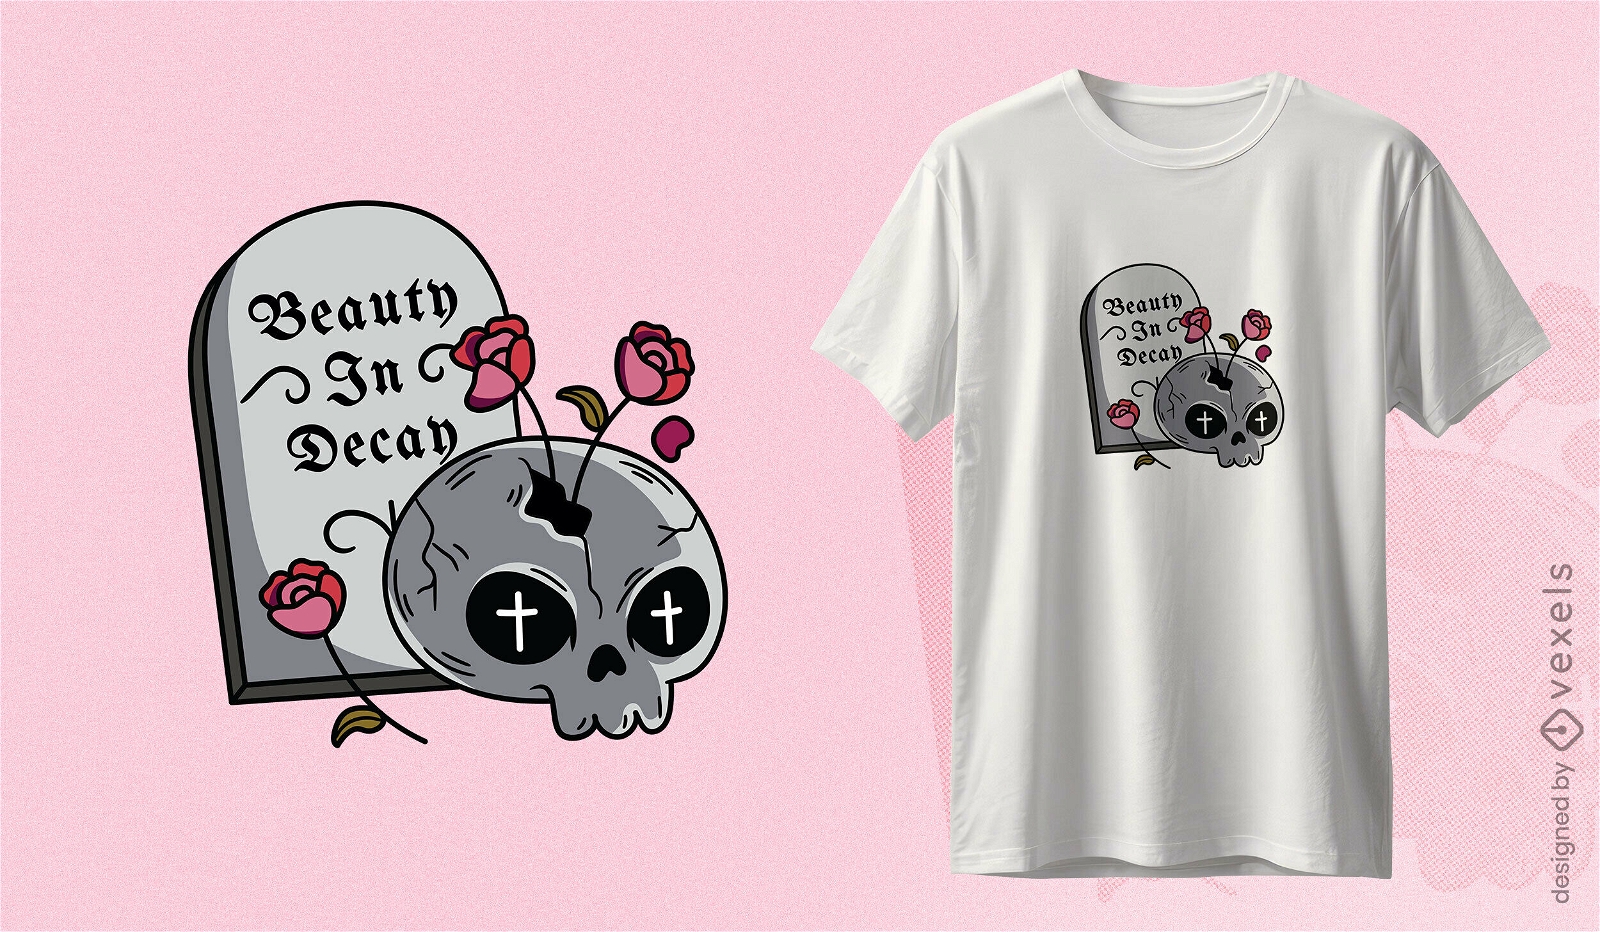 Beauty in decay skull t-shirt design